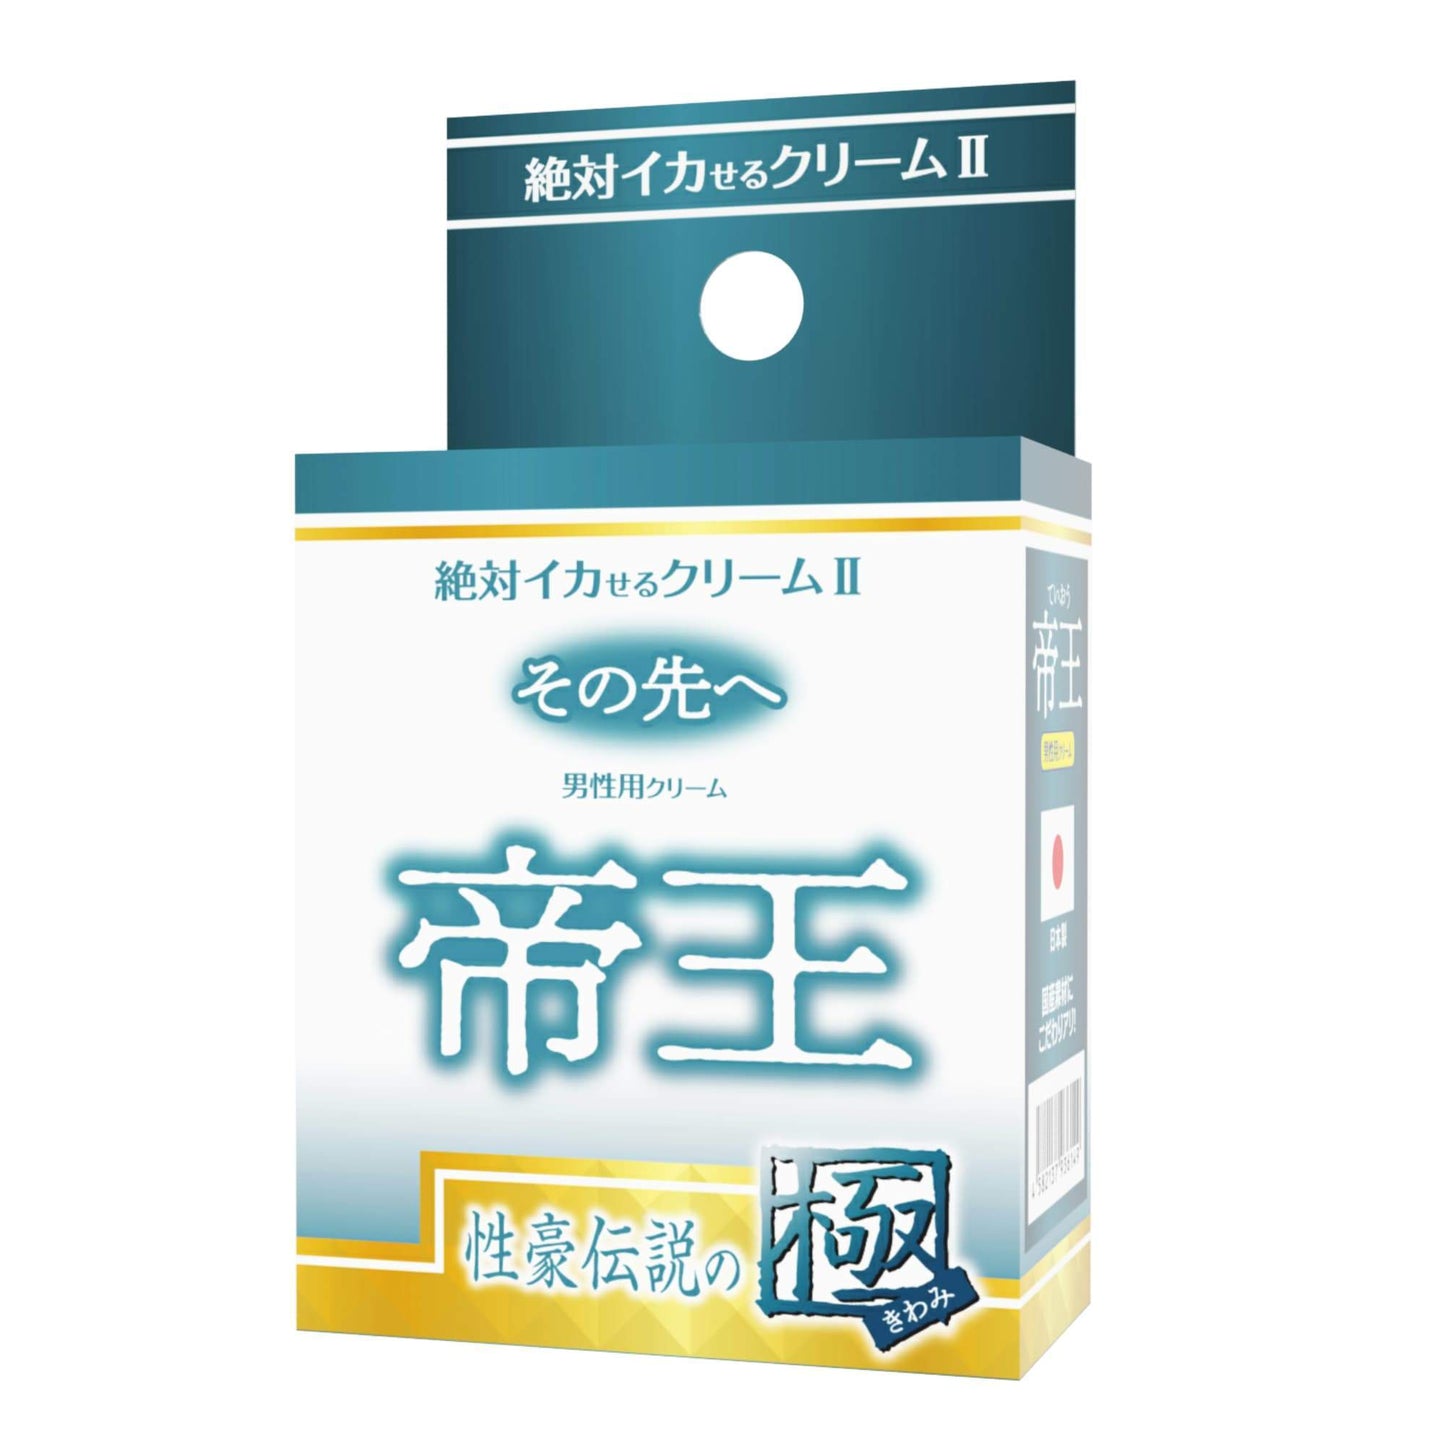 SSI JAPAN 【男性用】絕對持久軟膏 第 2 代 帝王 性豪傳説の極 延時軟膏及噴霧 購買